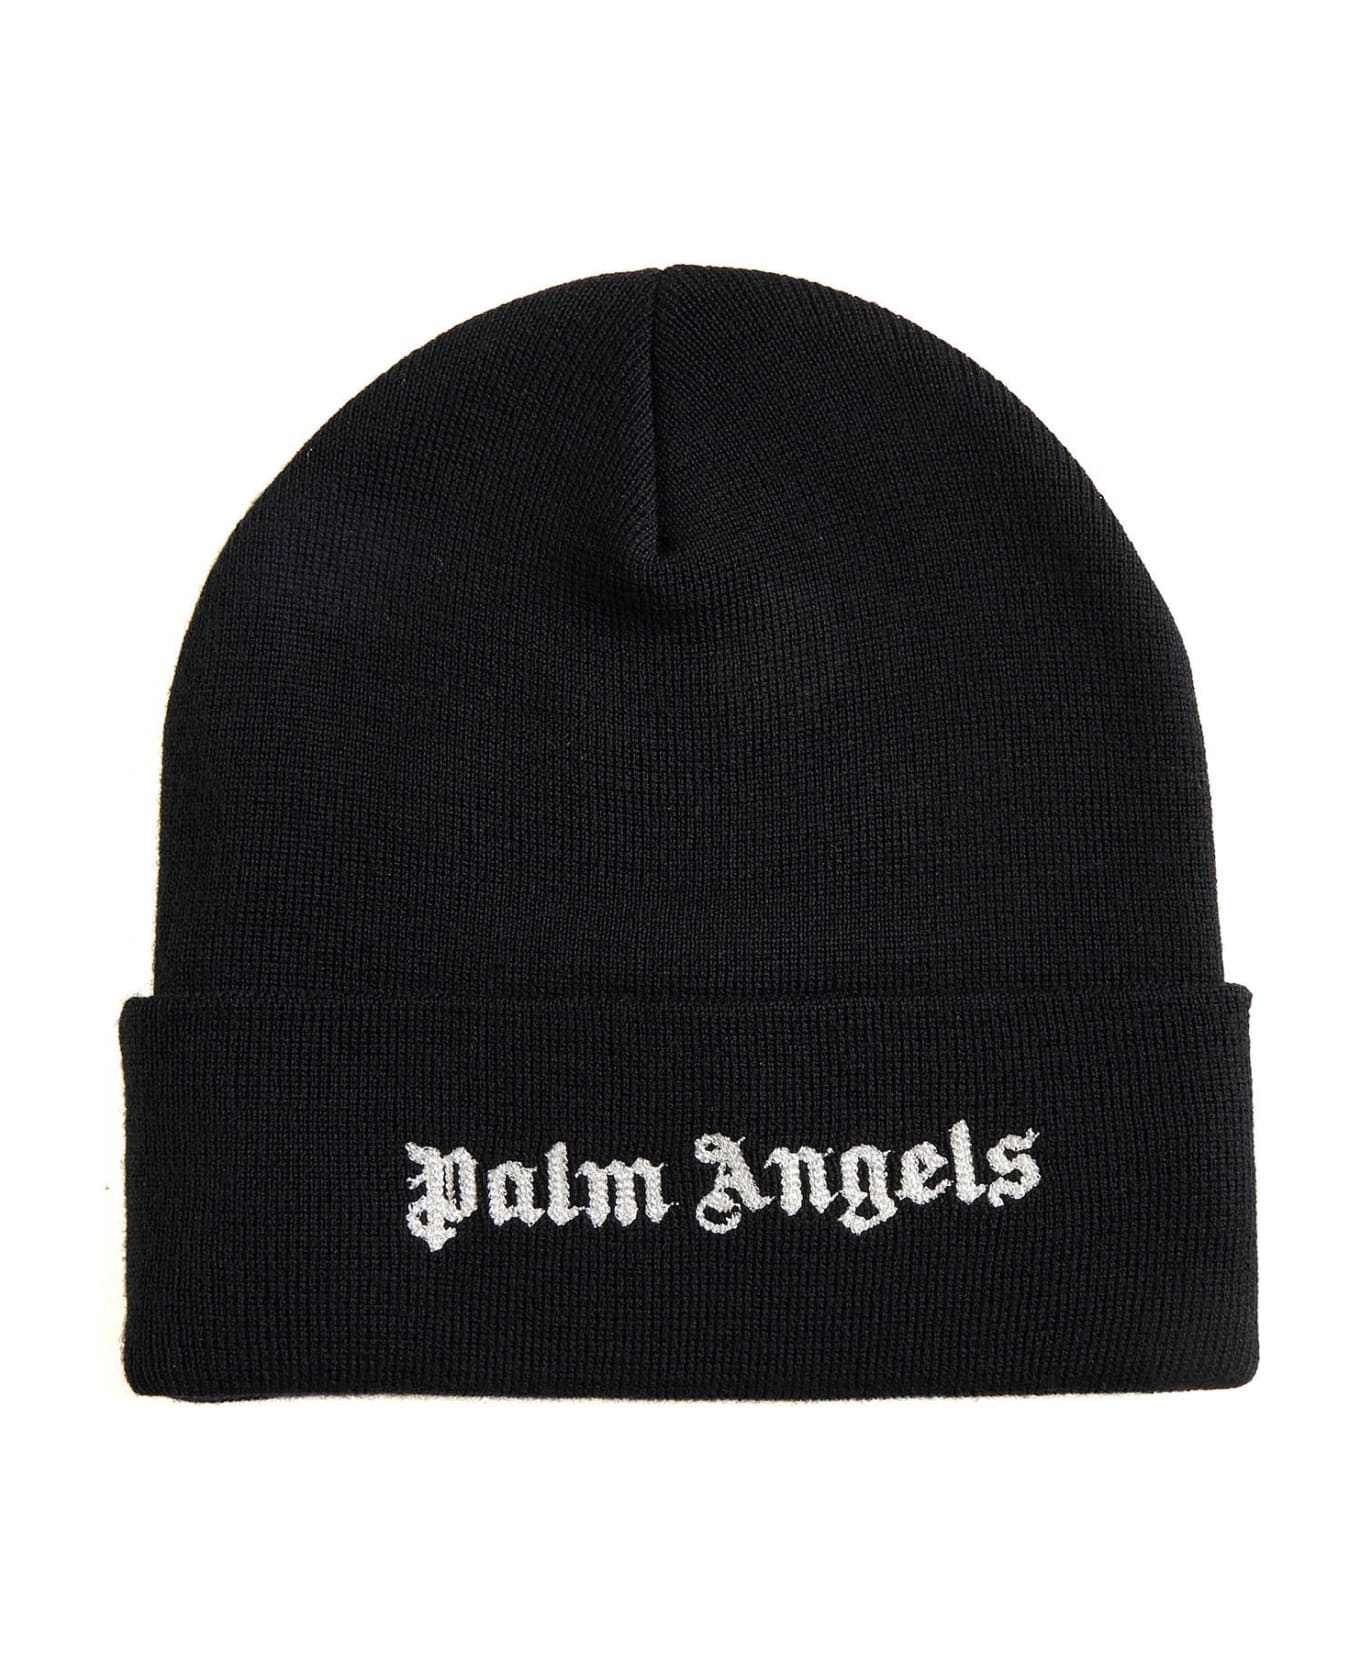 Palm Angels Logo Wool Beanie - Black Whit 帽子